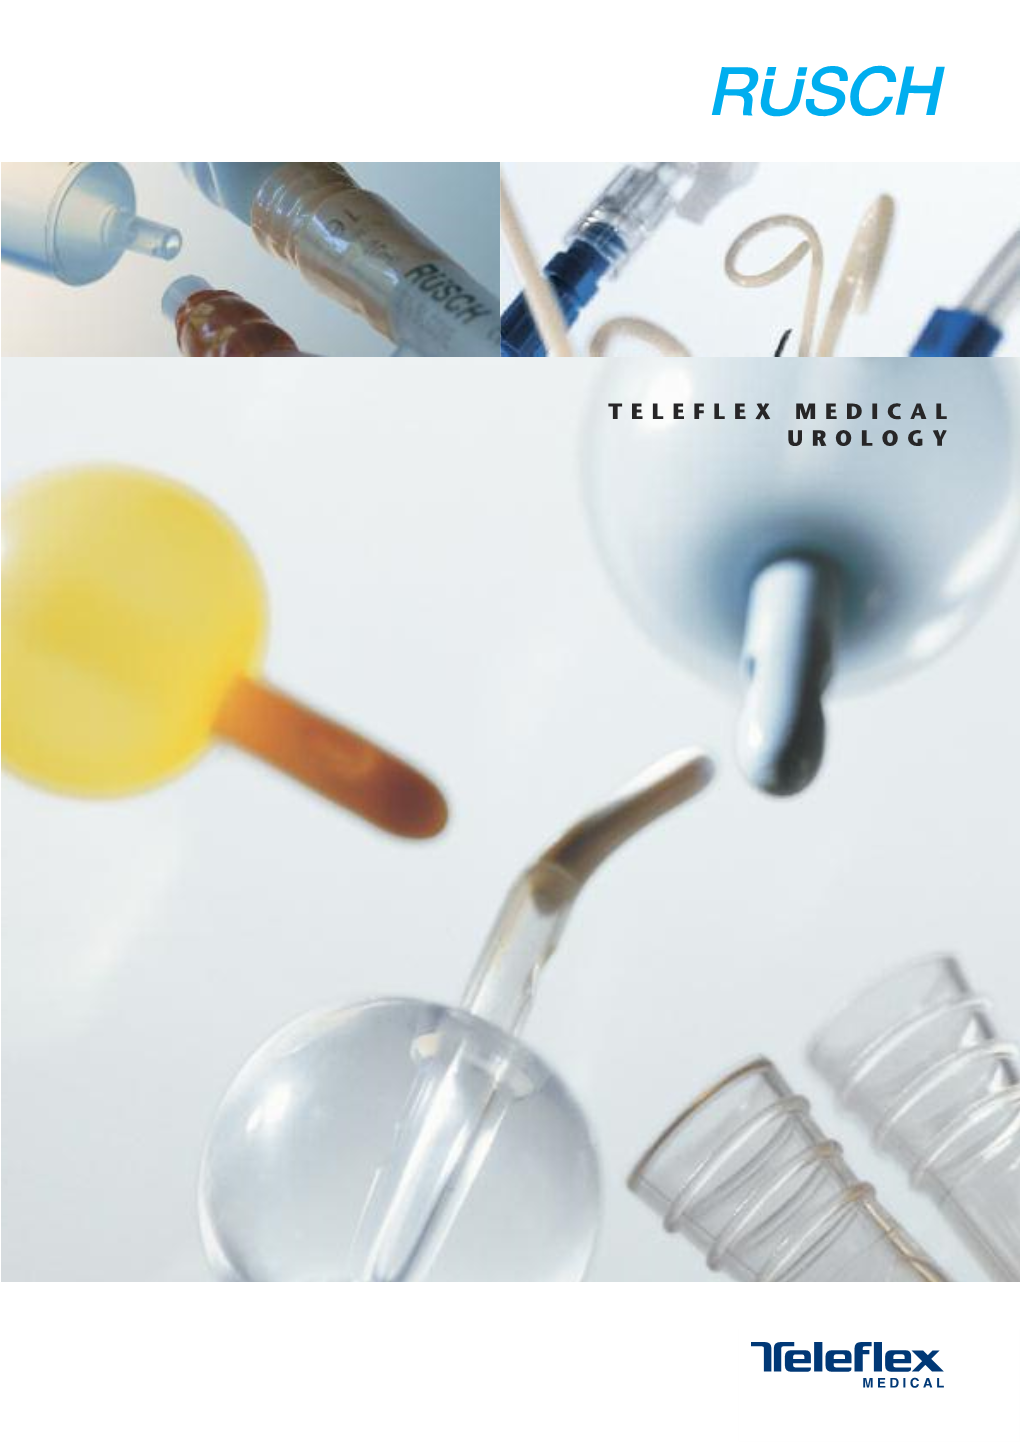 Teleflex Medical Urology